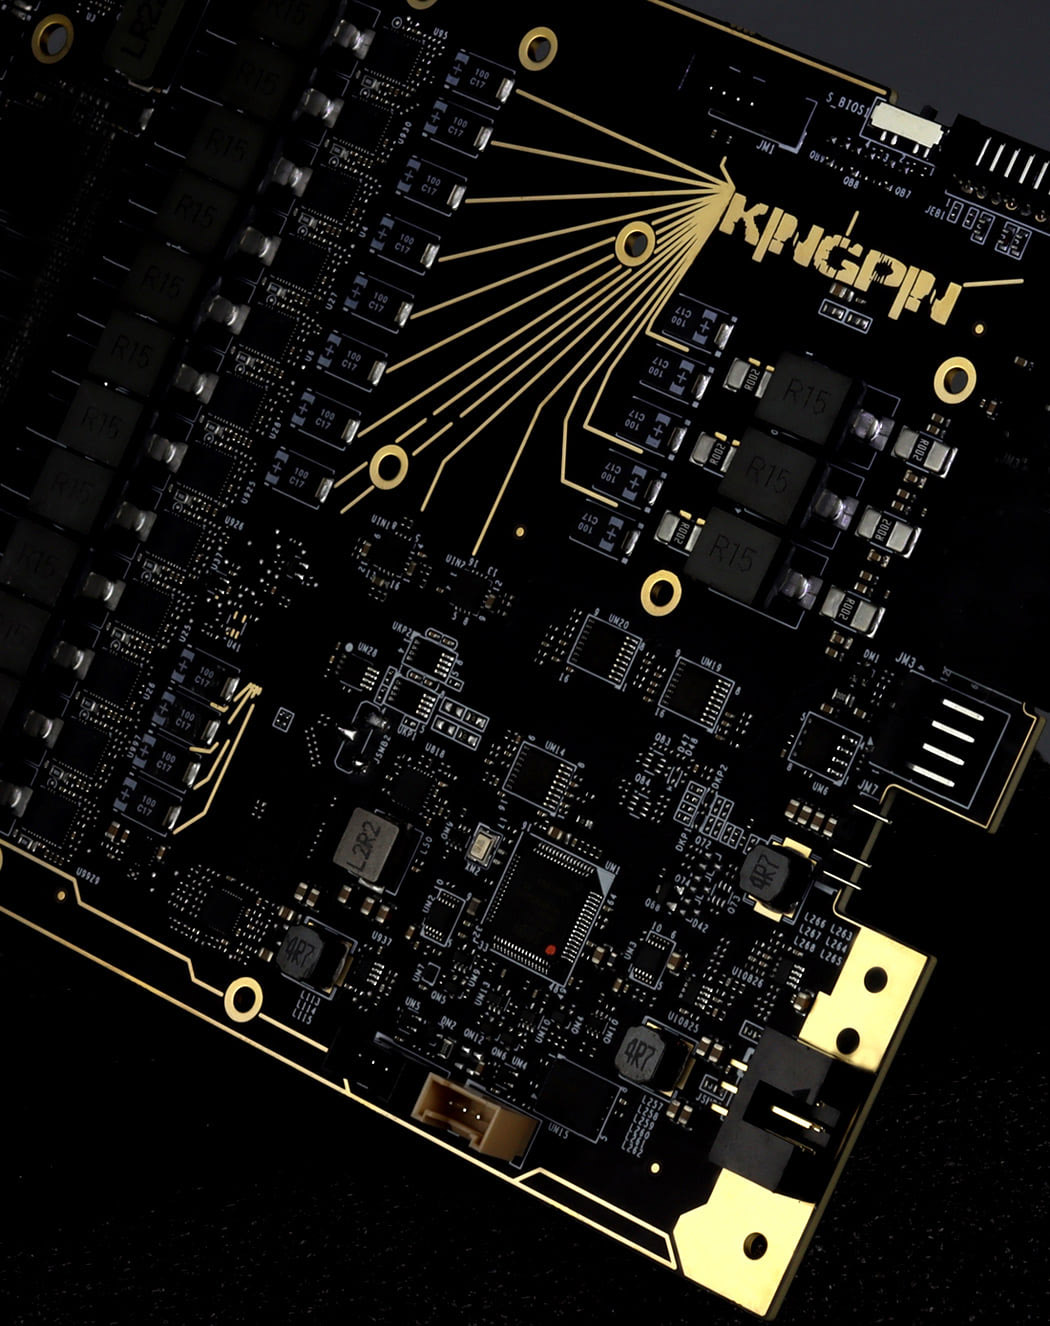 EVGA RTX 3090 Ti KINGPIN照片曝光，推測配備PCI-E 5.0 16針供電接口